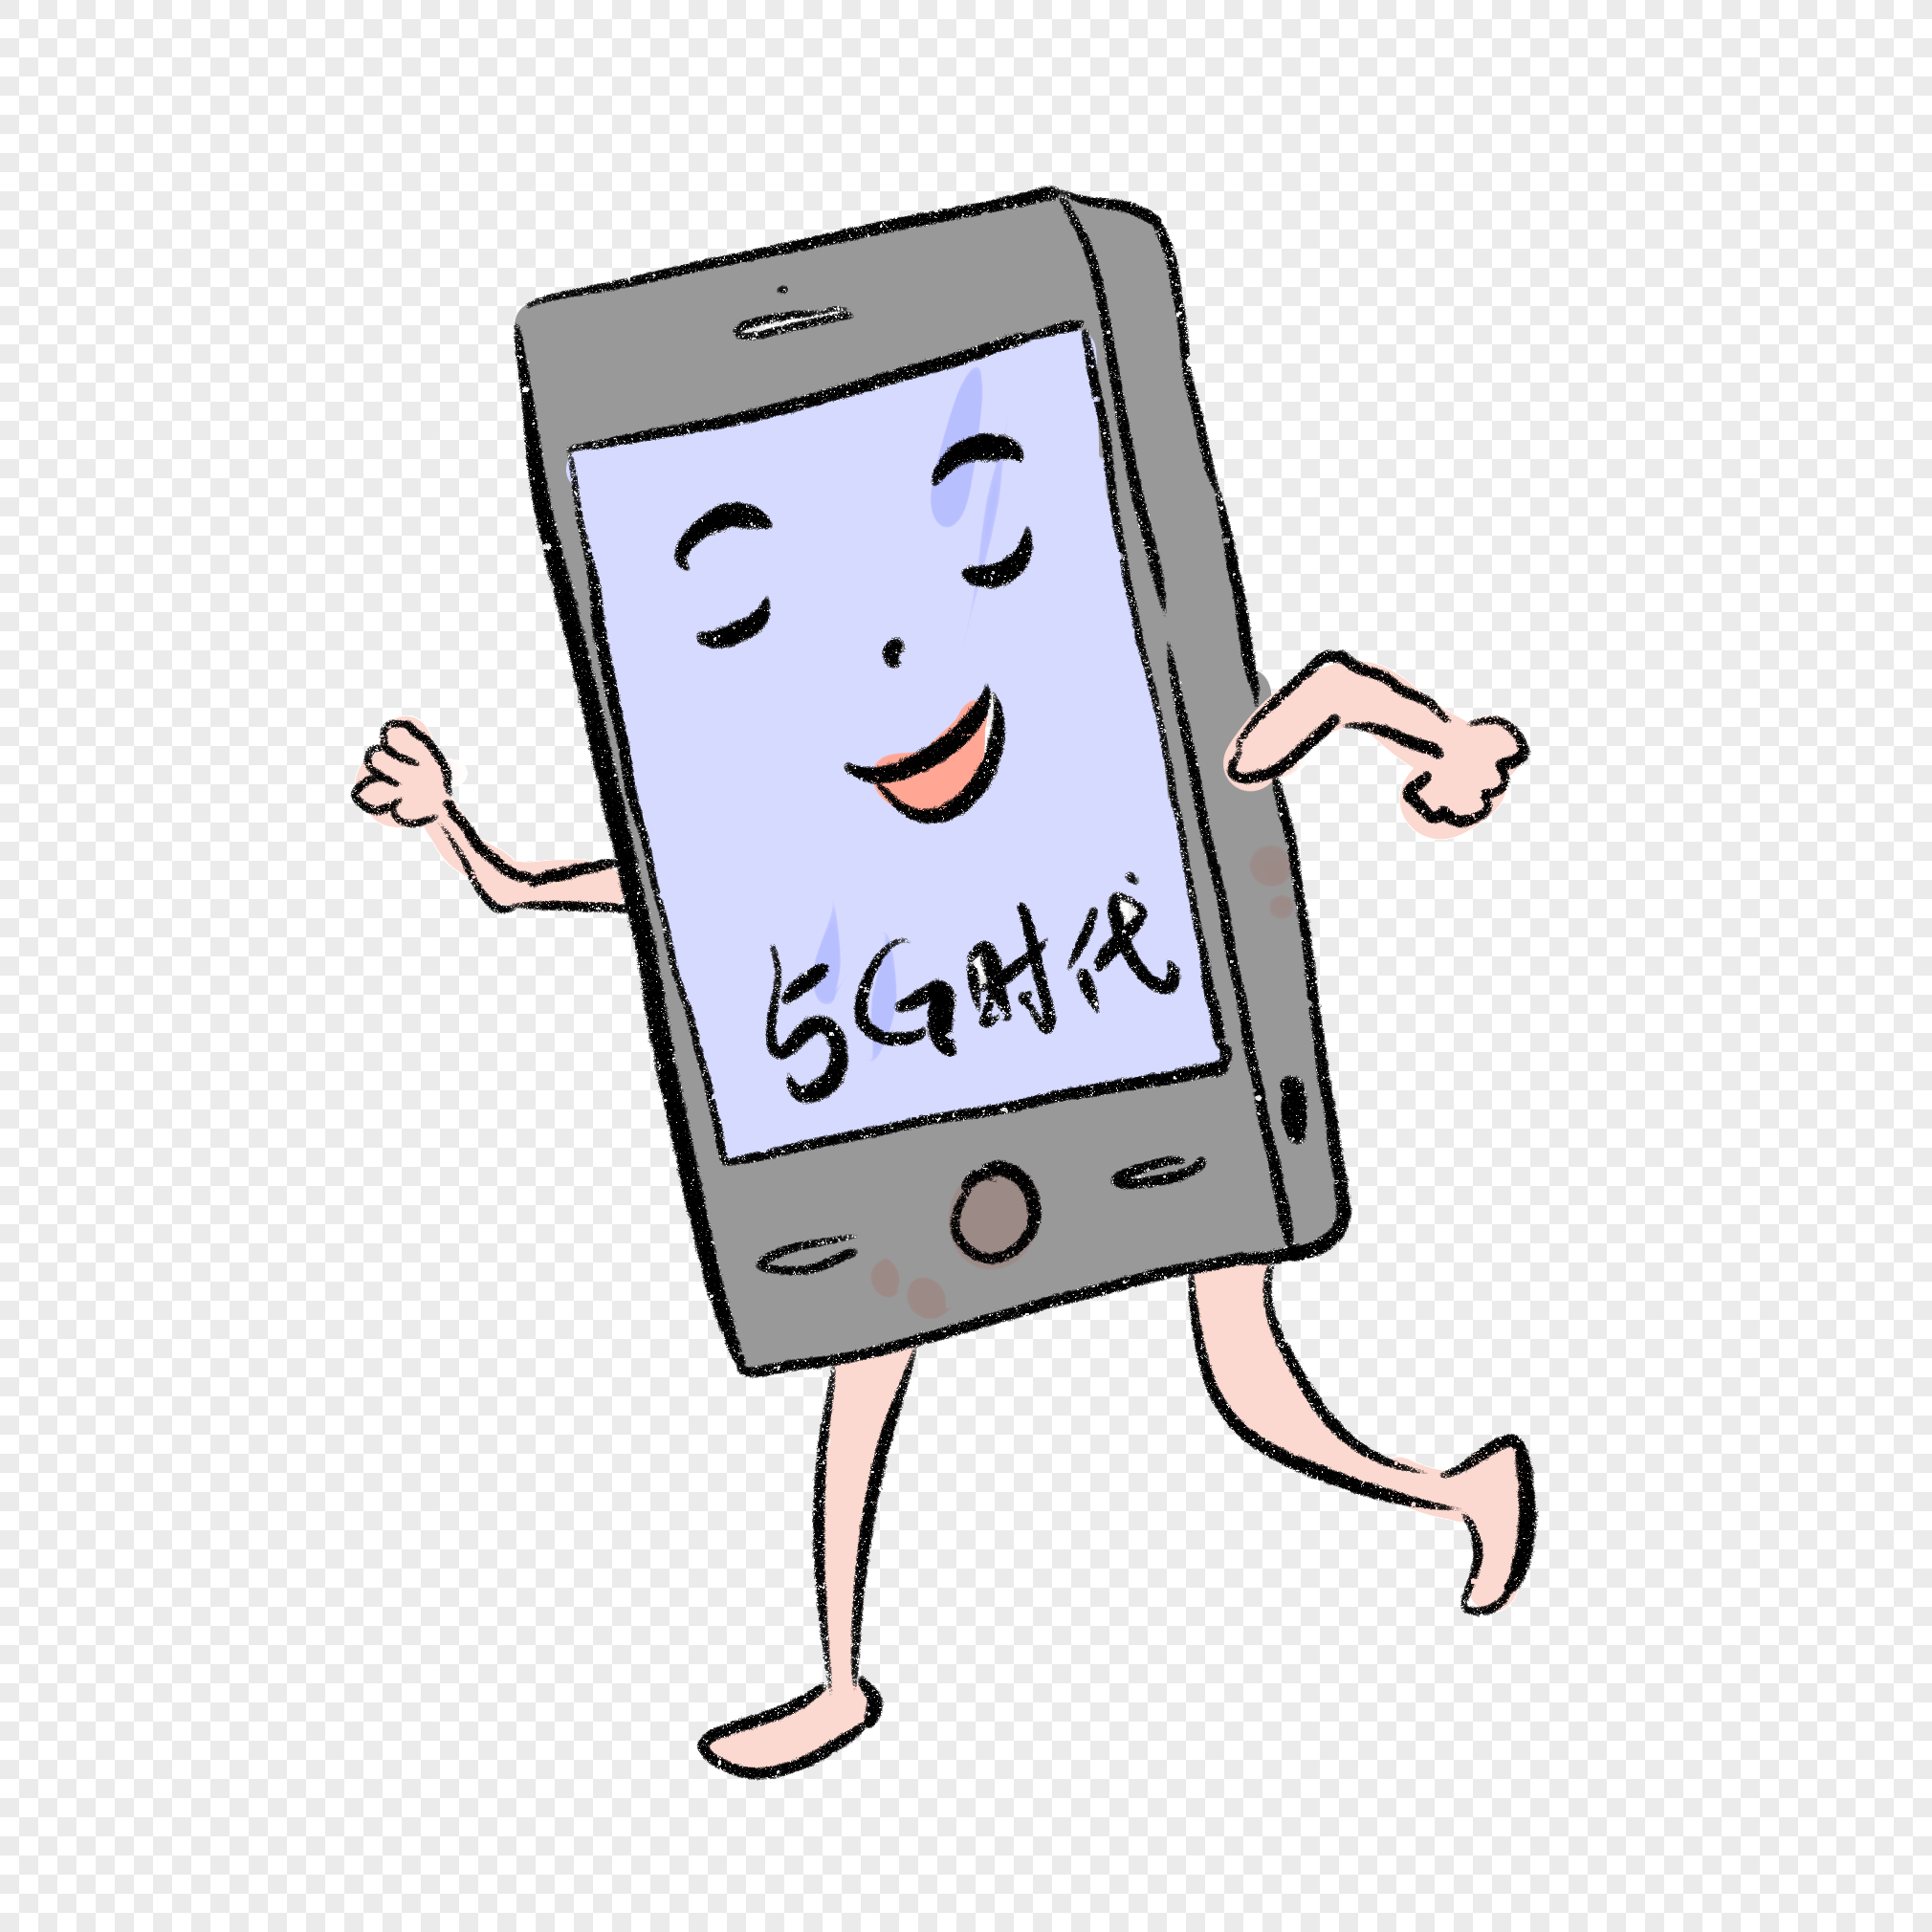 Unsur Telefon Bimbit 5g Kartun Yang Ditarik Tangan gambar unduh gratis